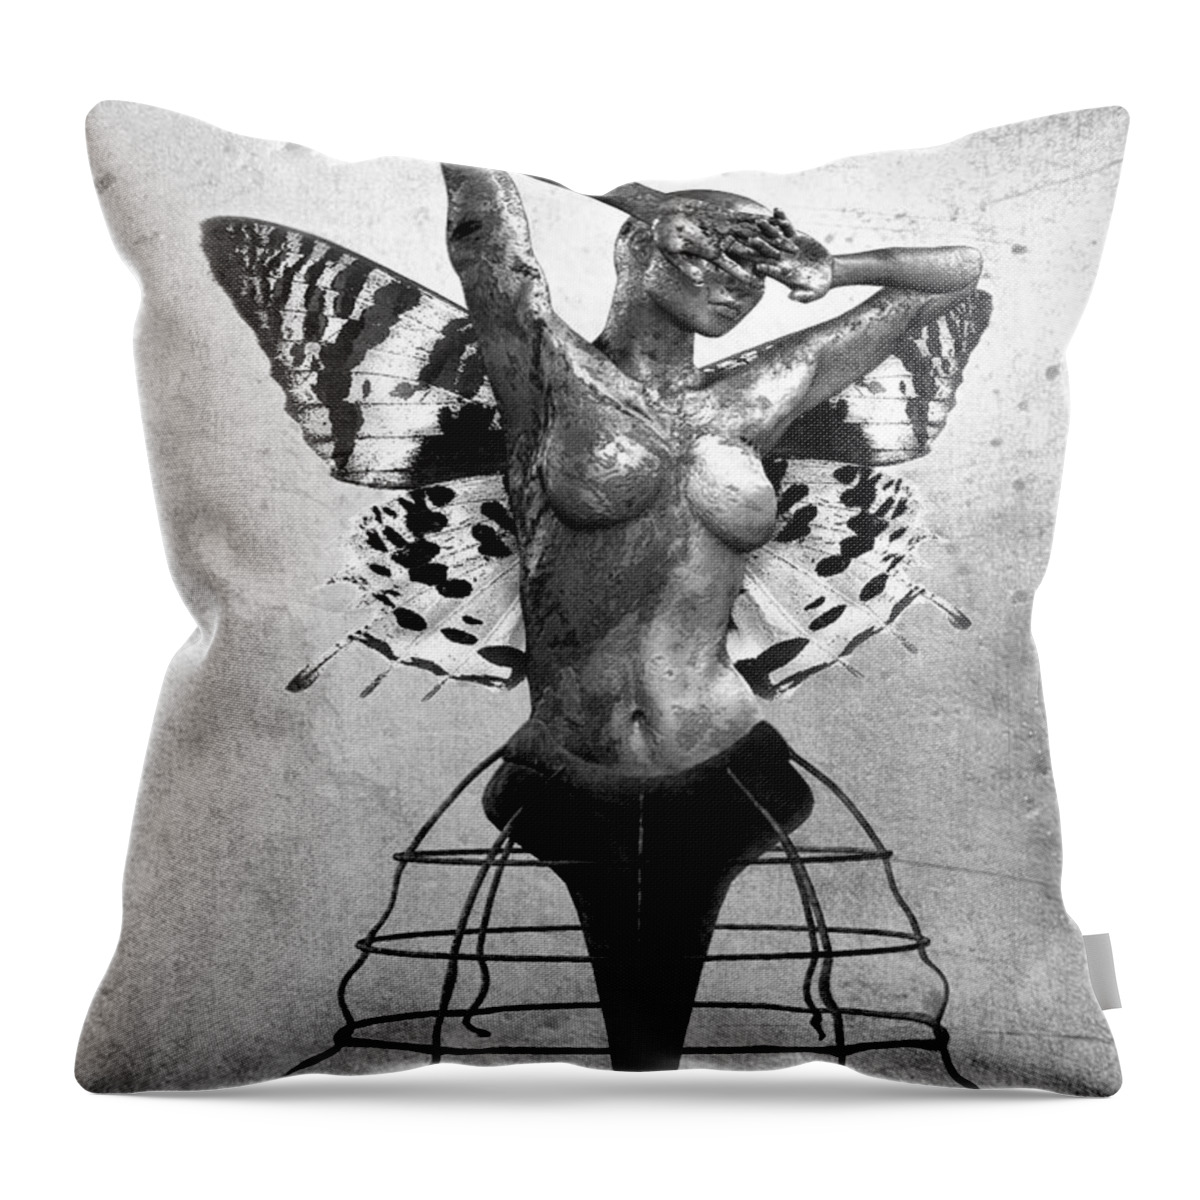 Photodream Throw Pillow featuring the digital art Scream of a Butterfly II by Jacky Gerritsen